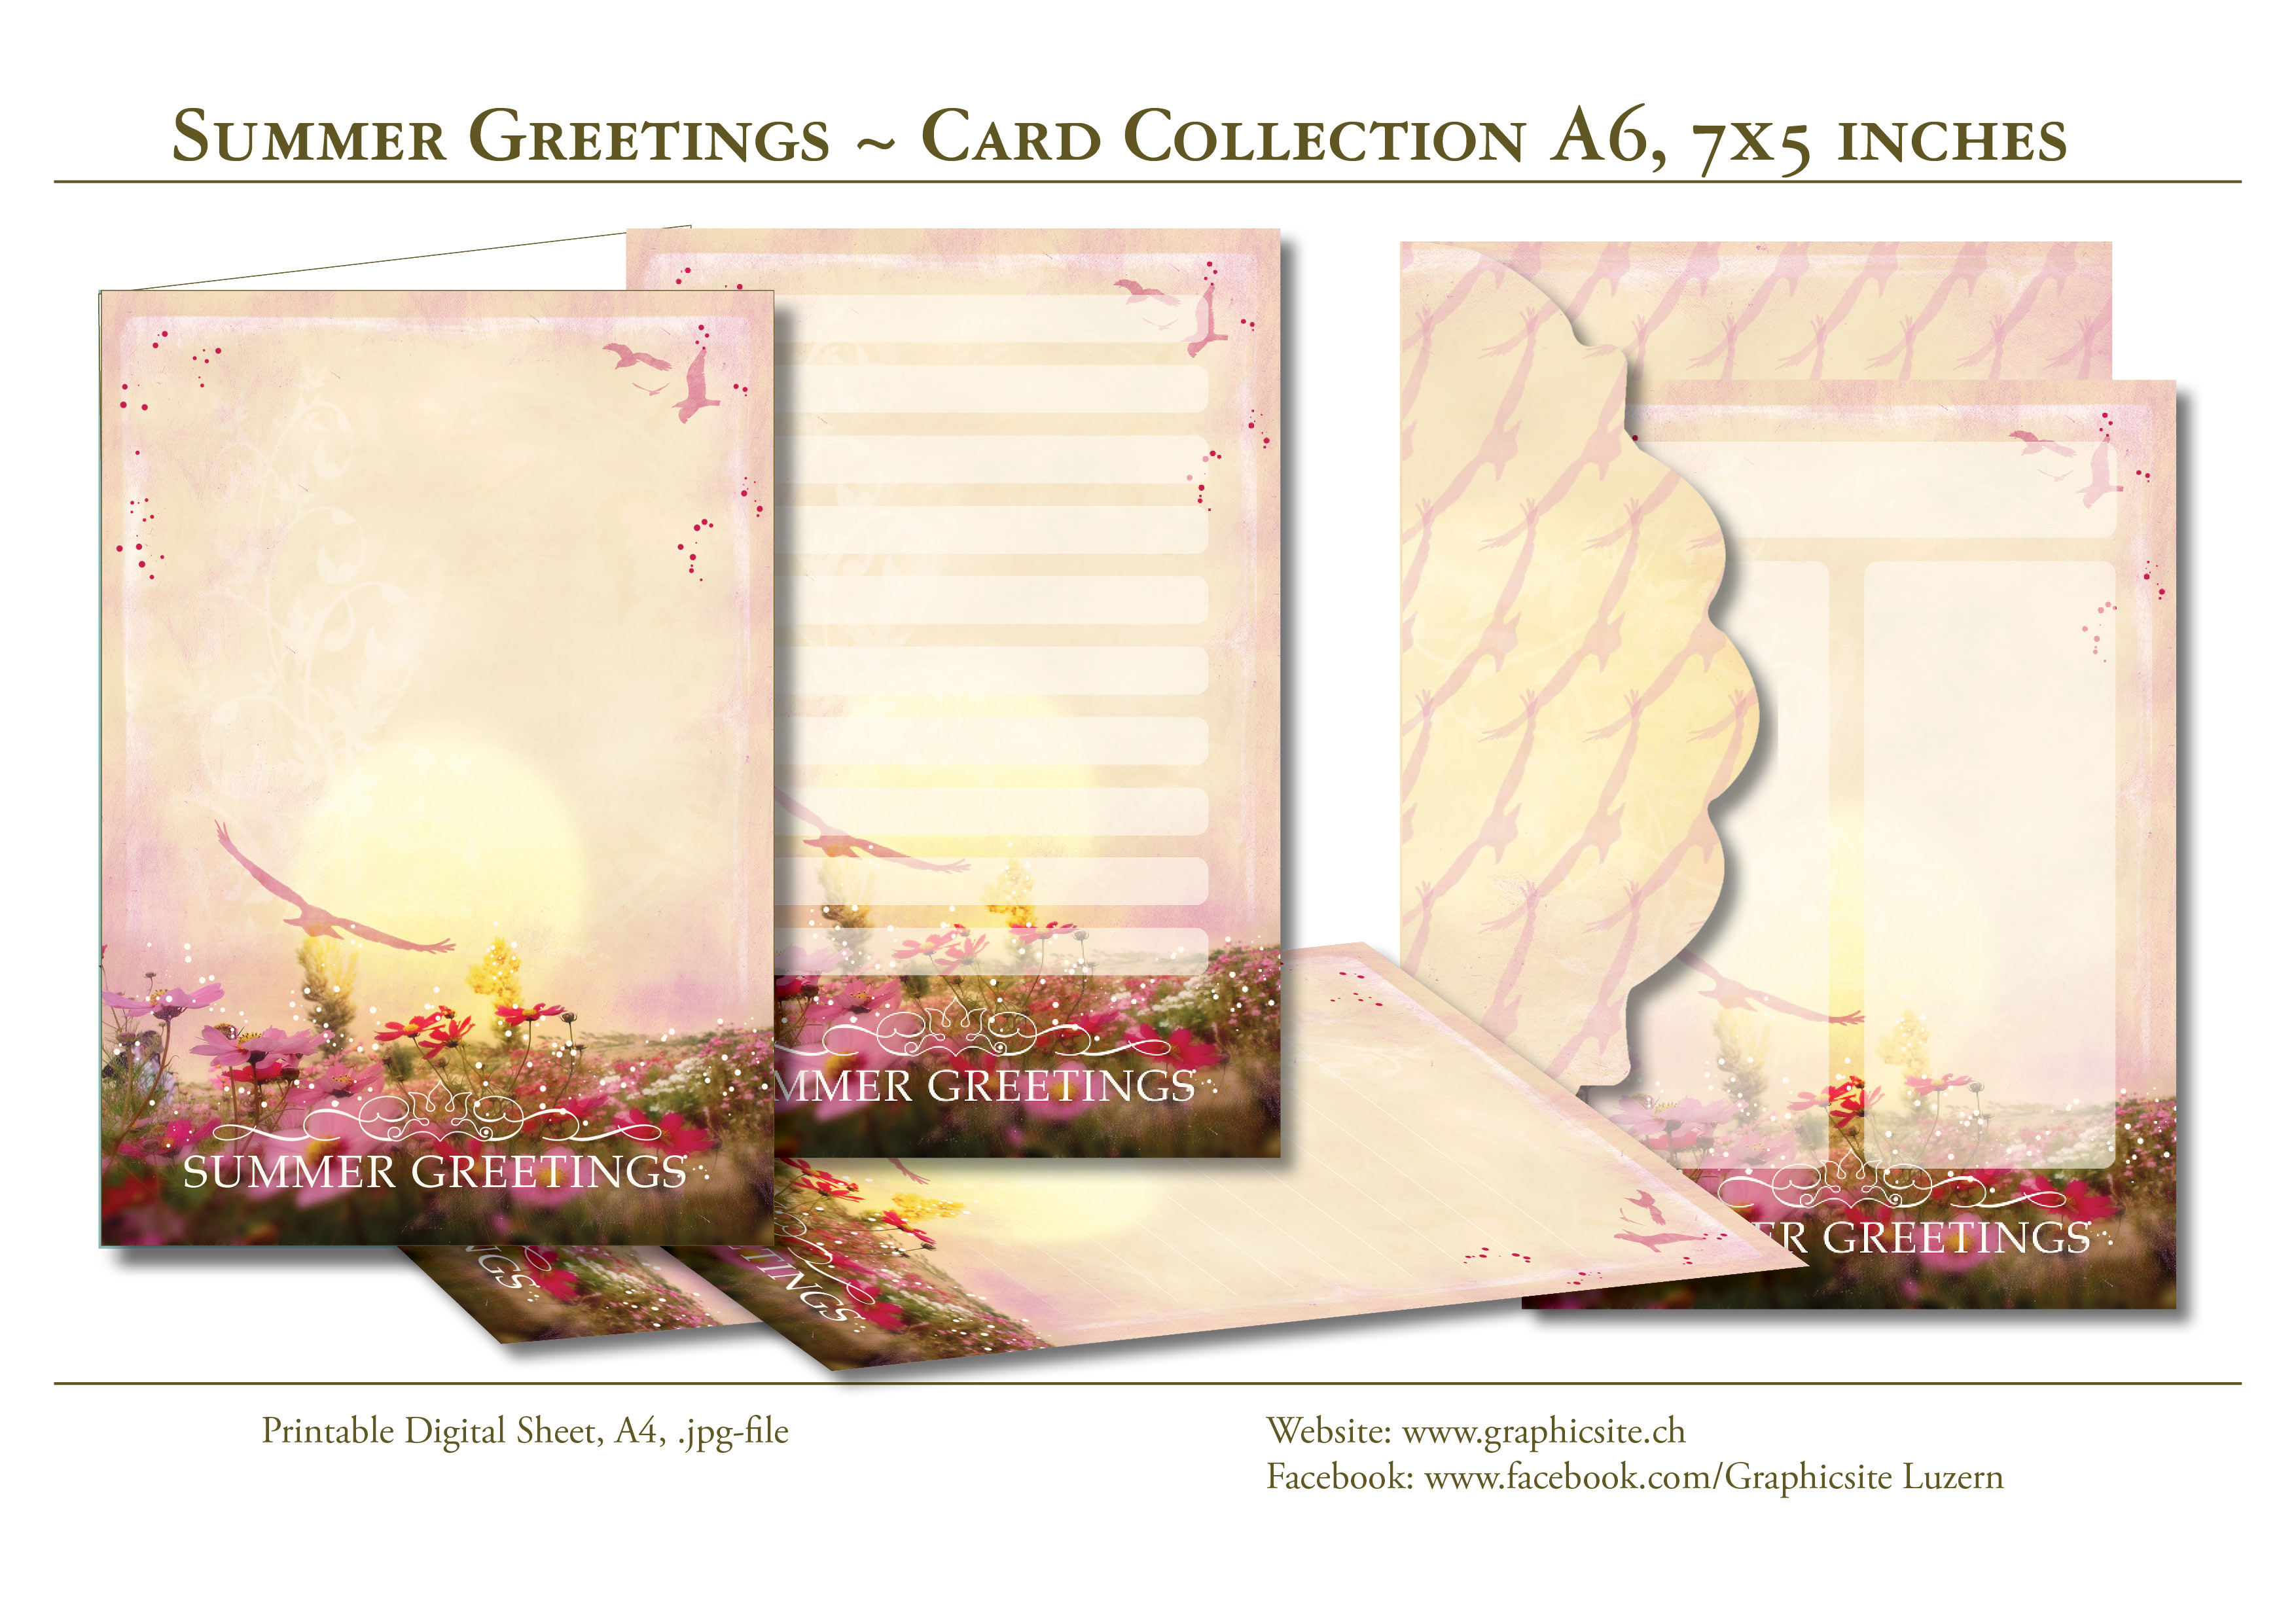 Printable Digital Sheets - Greeting Cards, Notecards, Summer, Flowerfield, flowers, birds, sun, envelop, graphic design, Luzern 